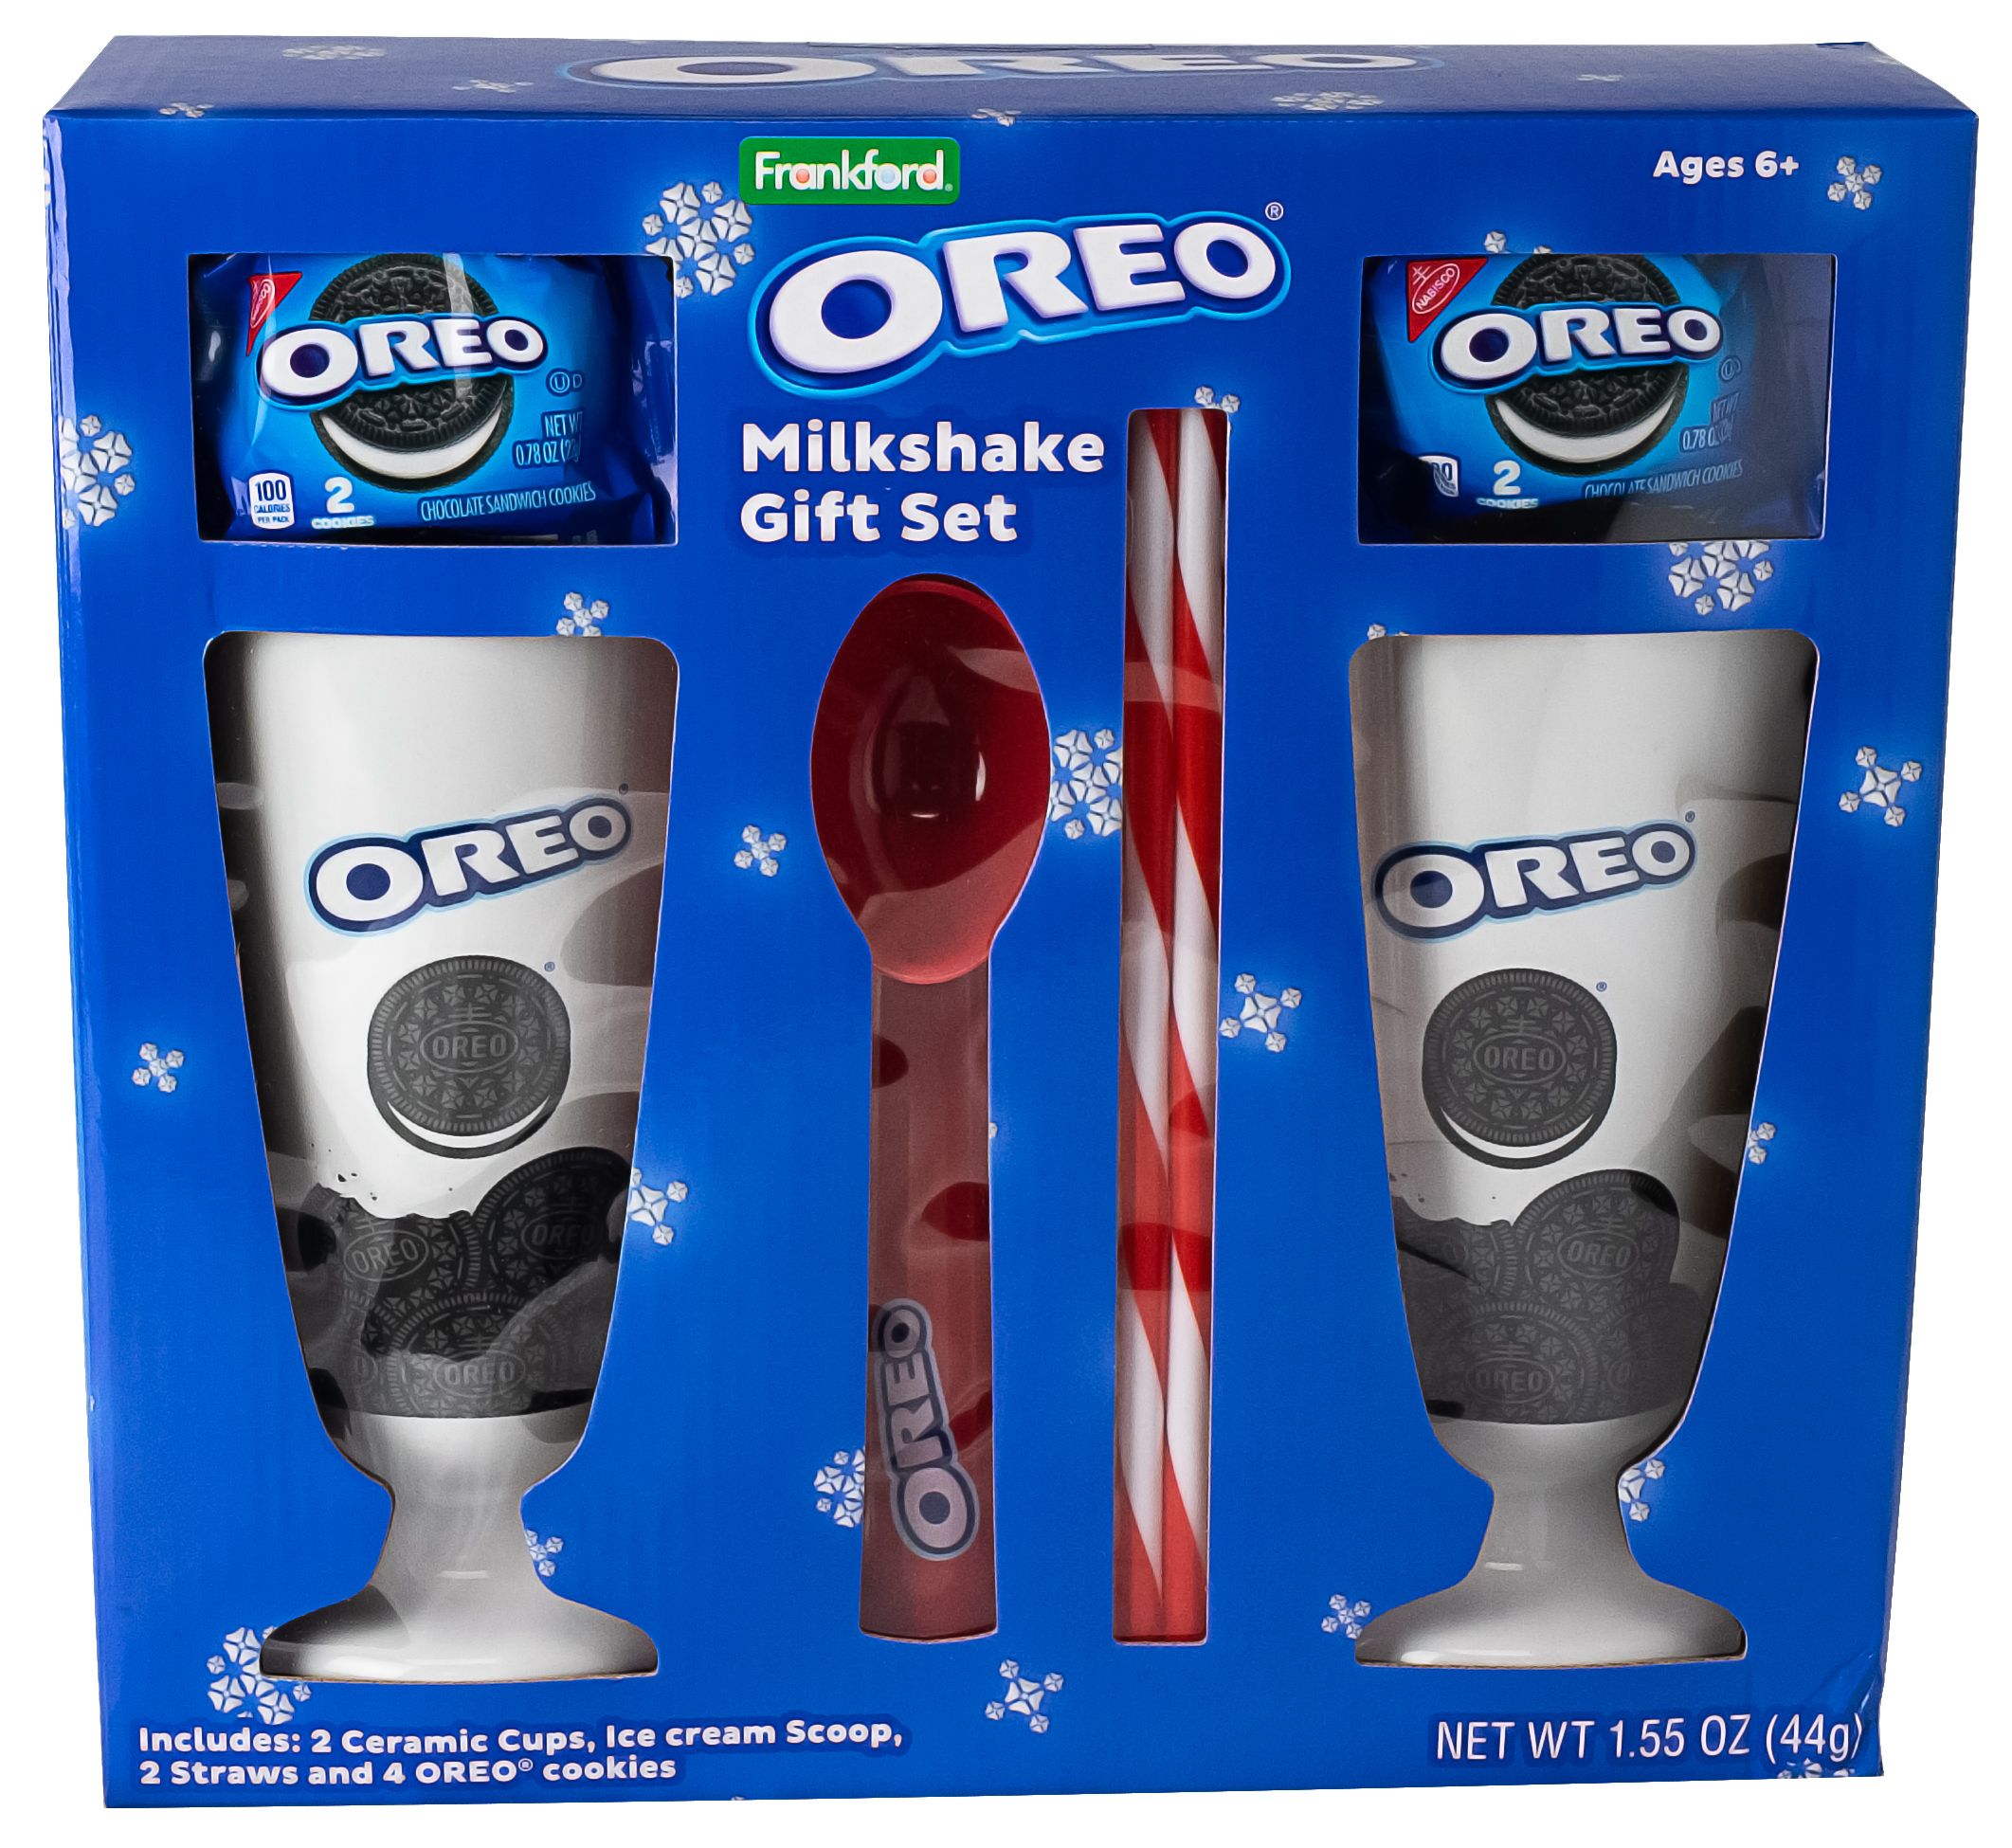 Oreo Is Selling a Milkshake Gift Set